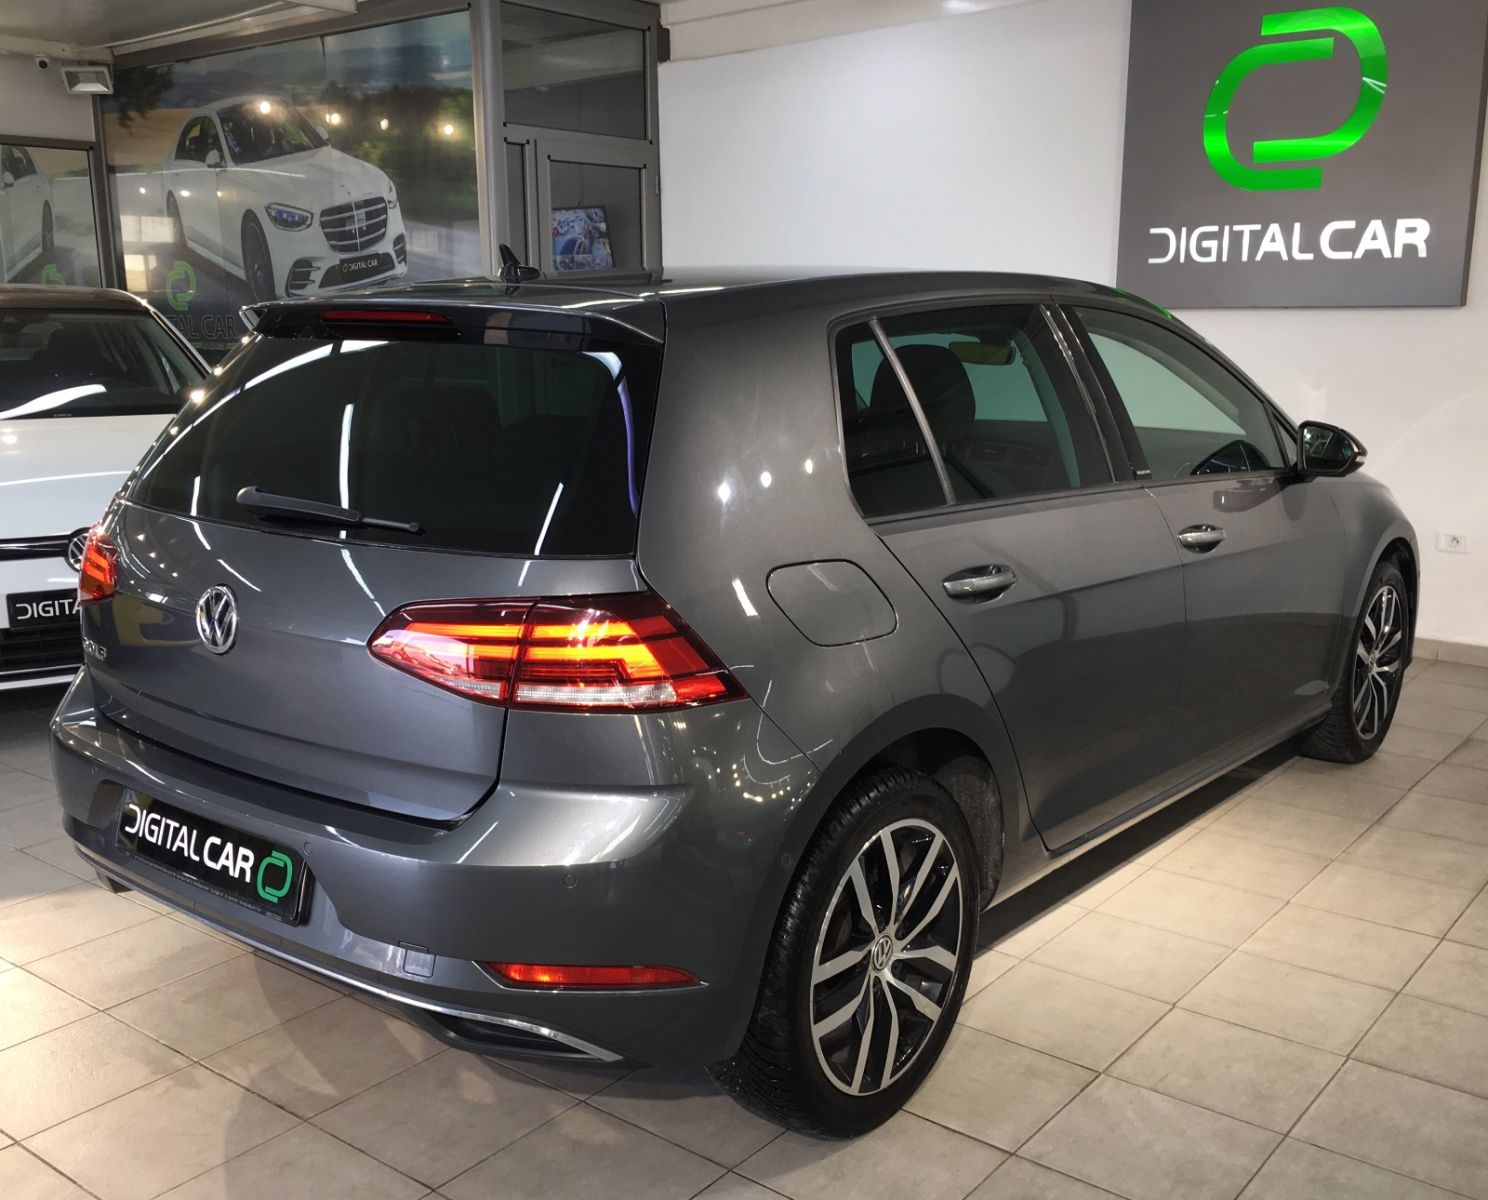 Autoradio ANDROID VW Golf, vente et installation des systèmes d'alarme  voiture Tunisie